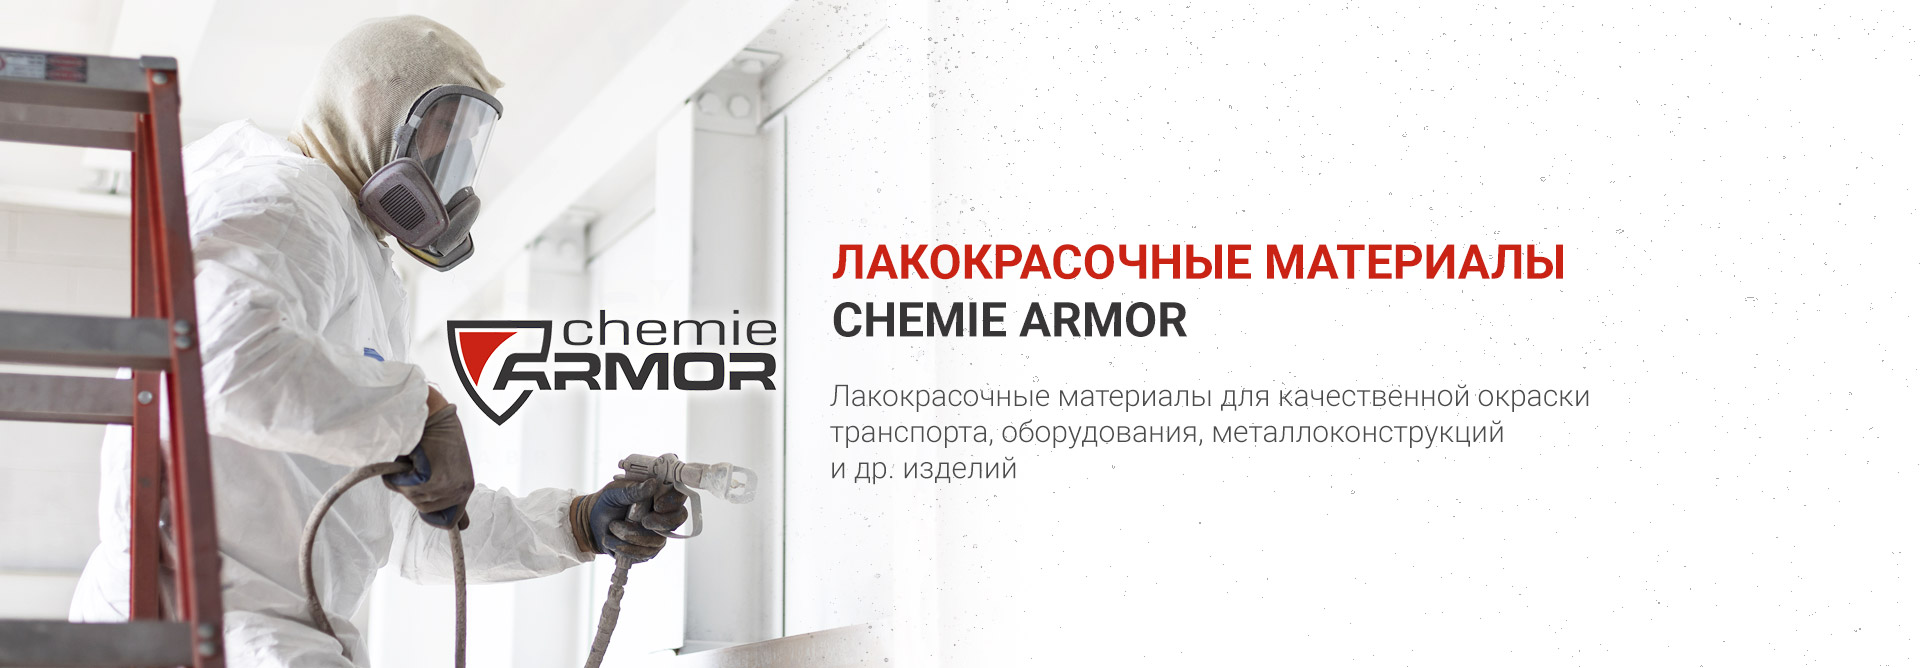 Лакокрасочные материалы Chemie armor